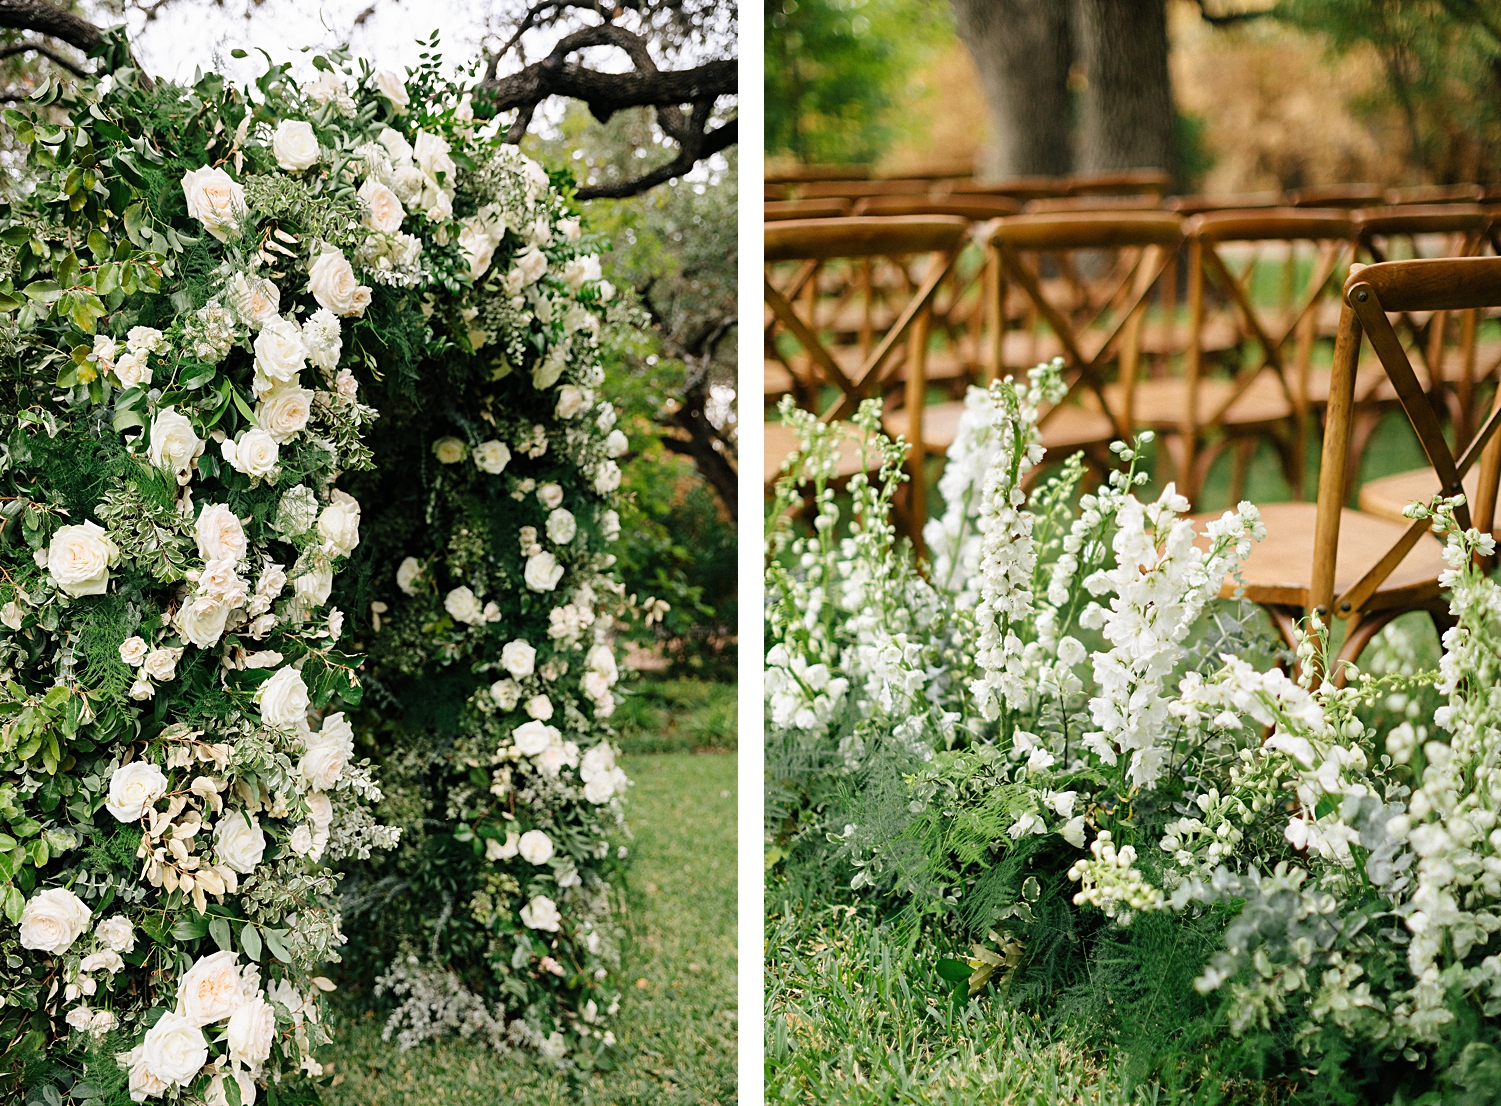 Wedding ceremony design altar Mattie's Austin Venue trees white flowers floral arch